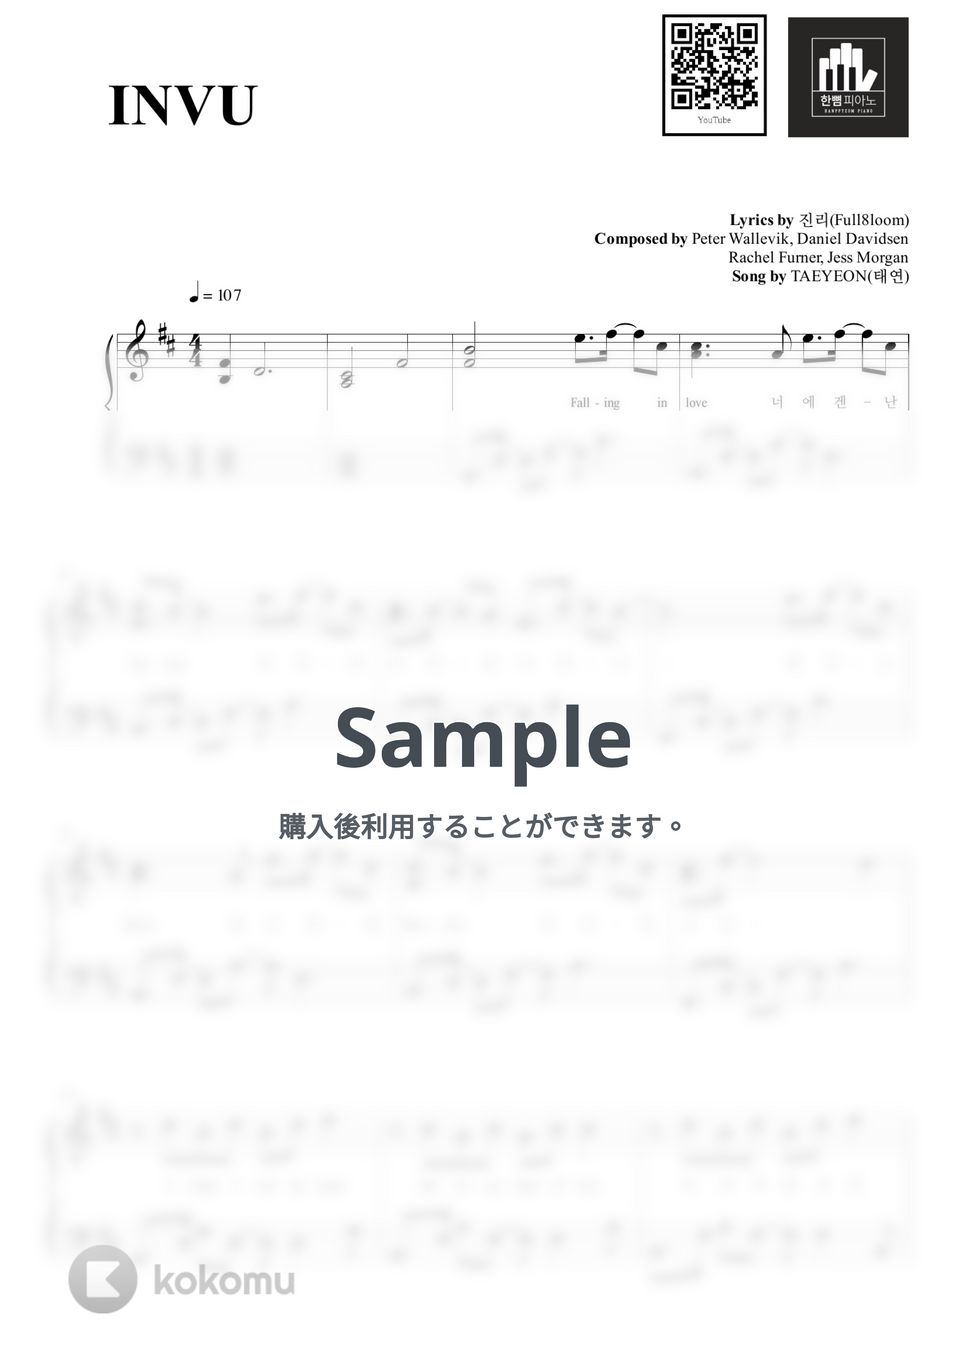 TAEYEON - INVU (PIANO COVER) by HANPPYEOMPIANO